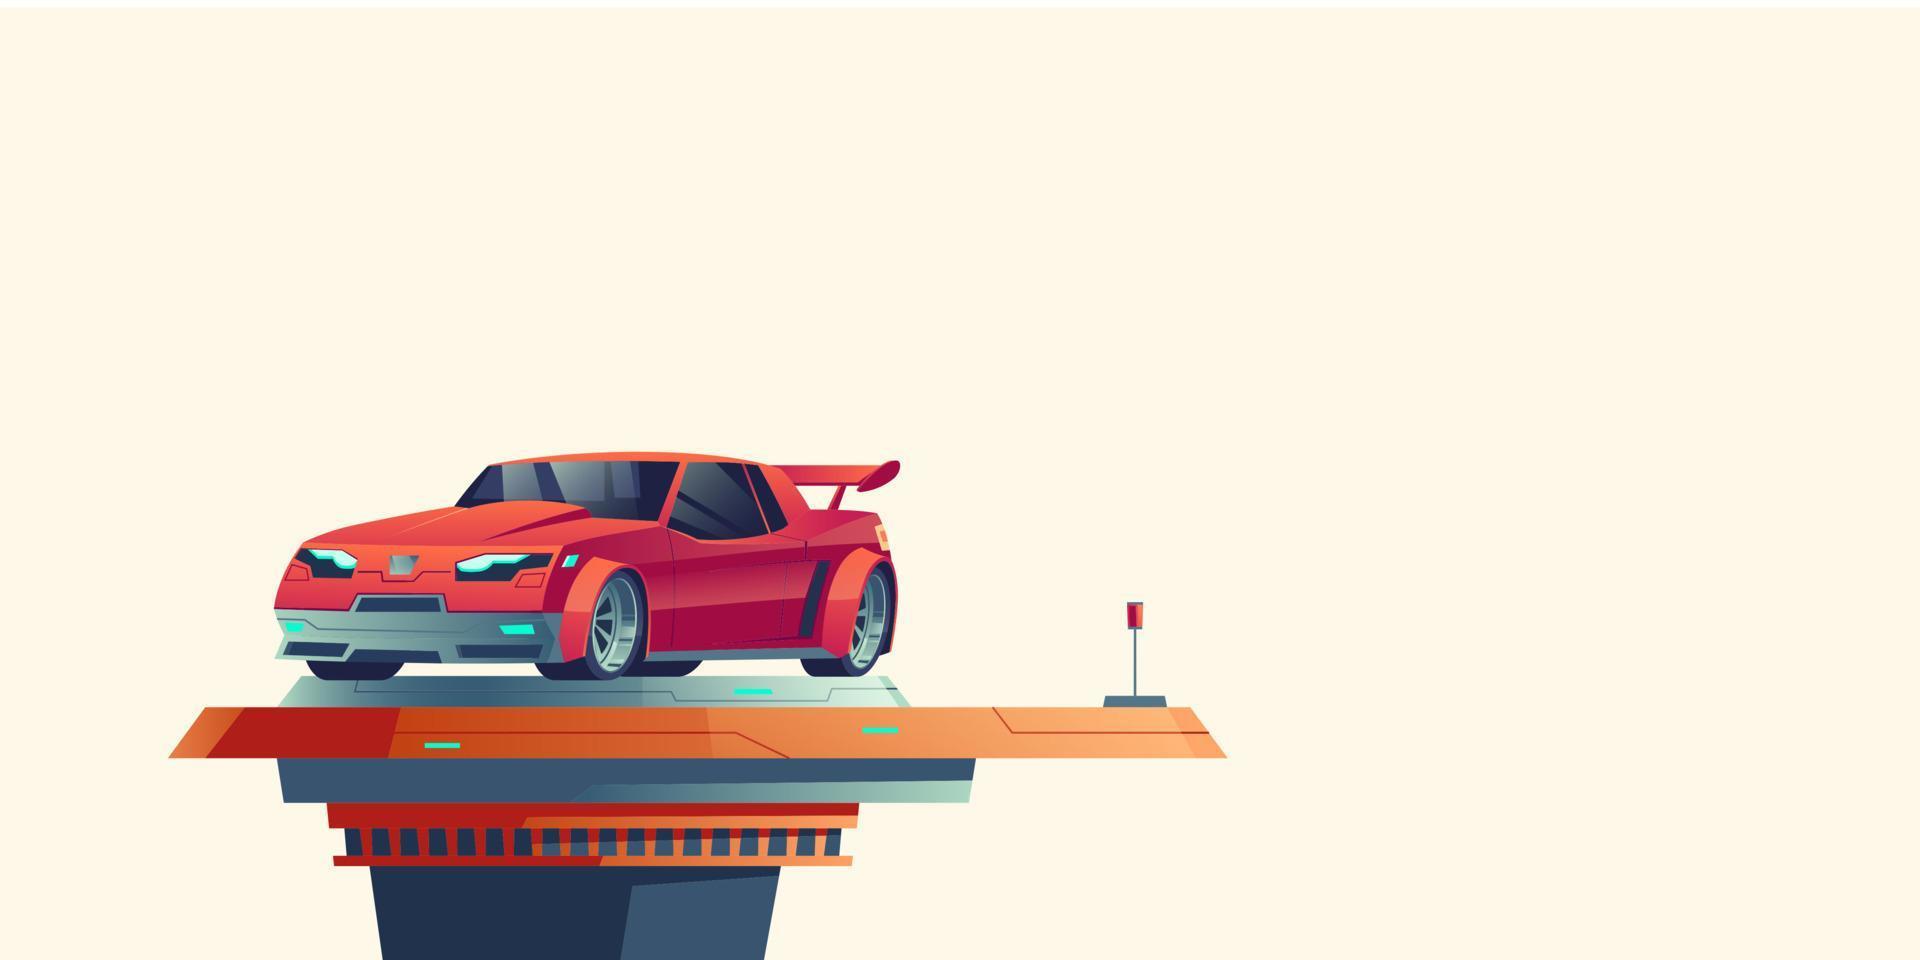 Red sport car on futuristic extendable platform vector